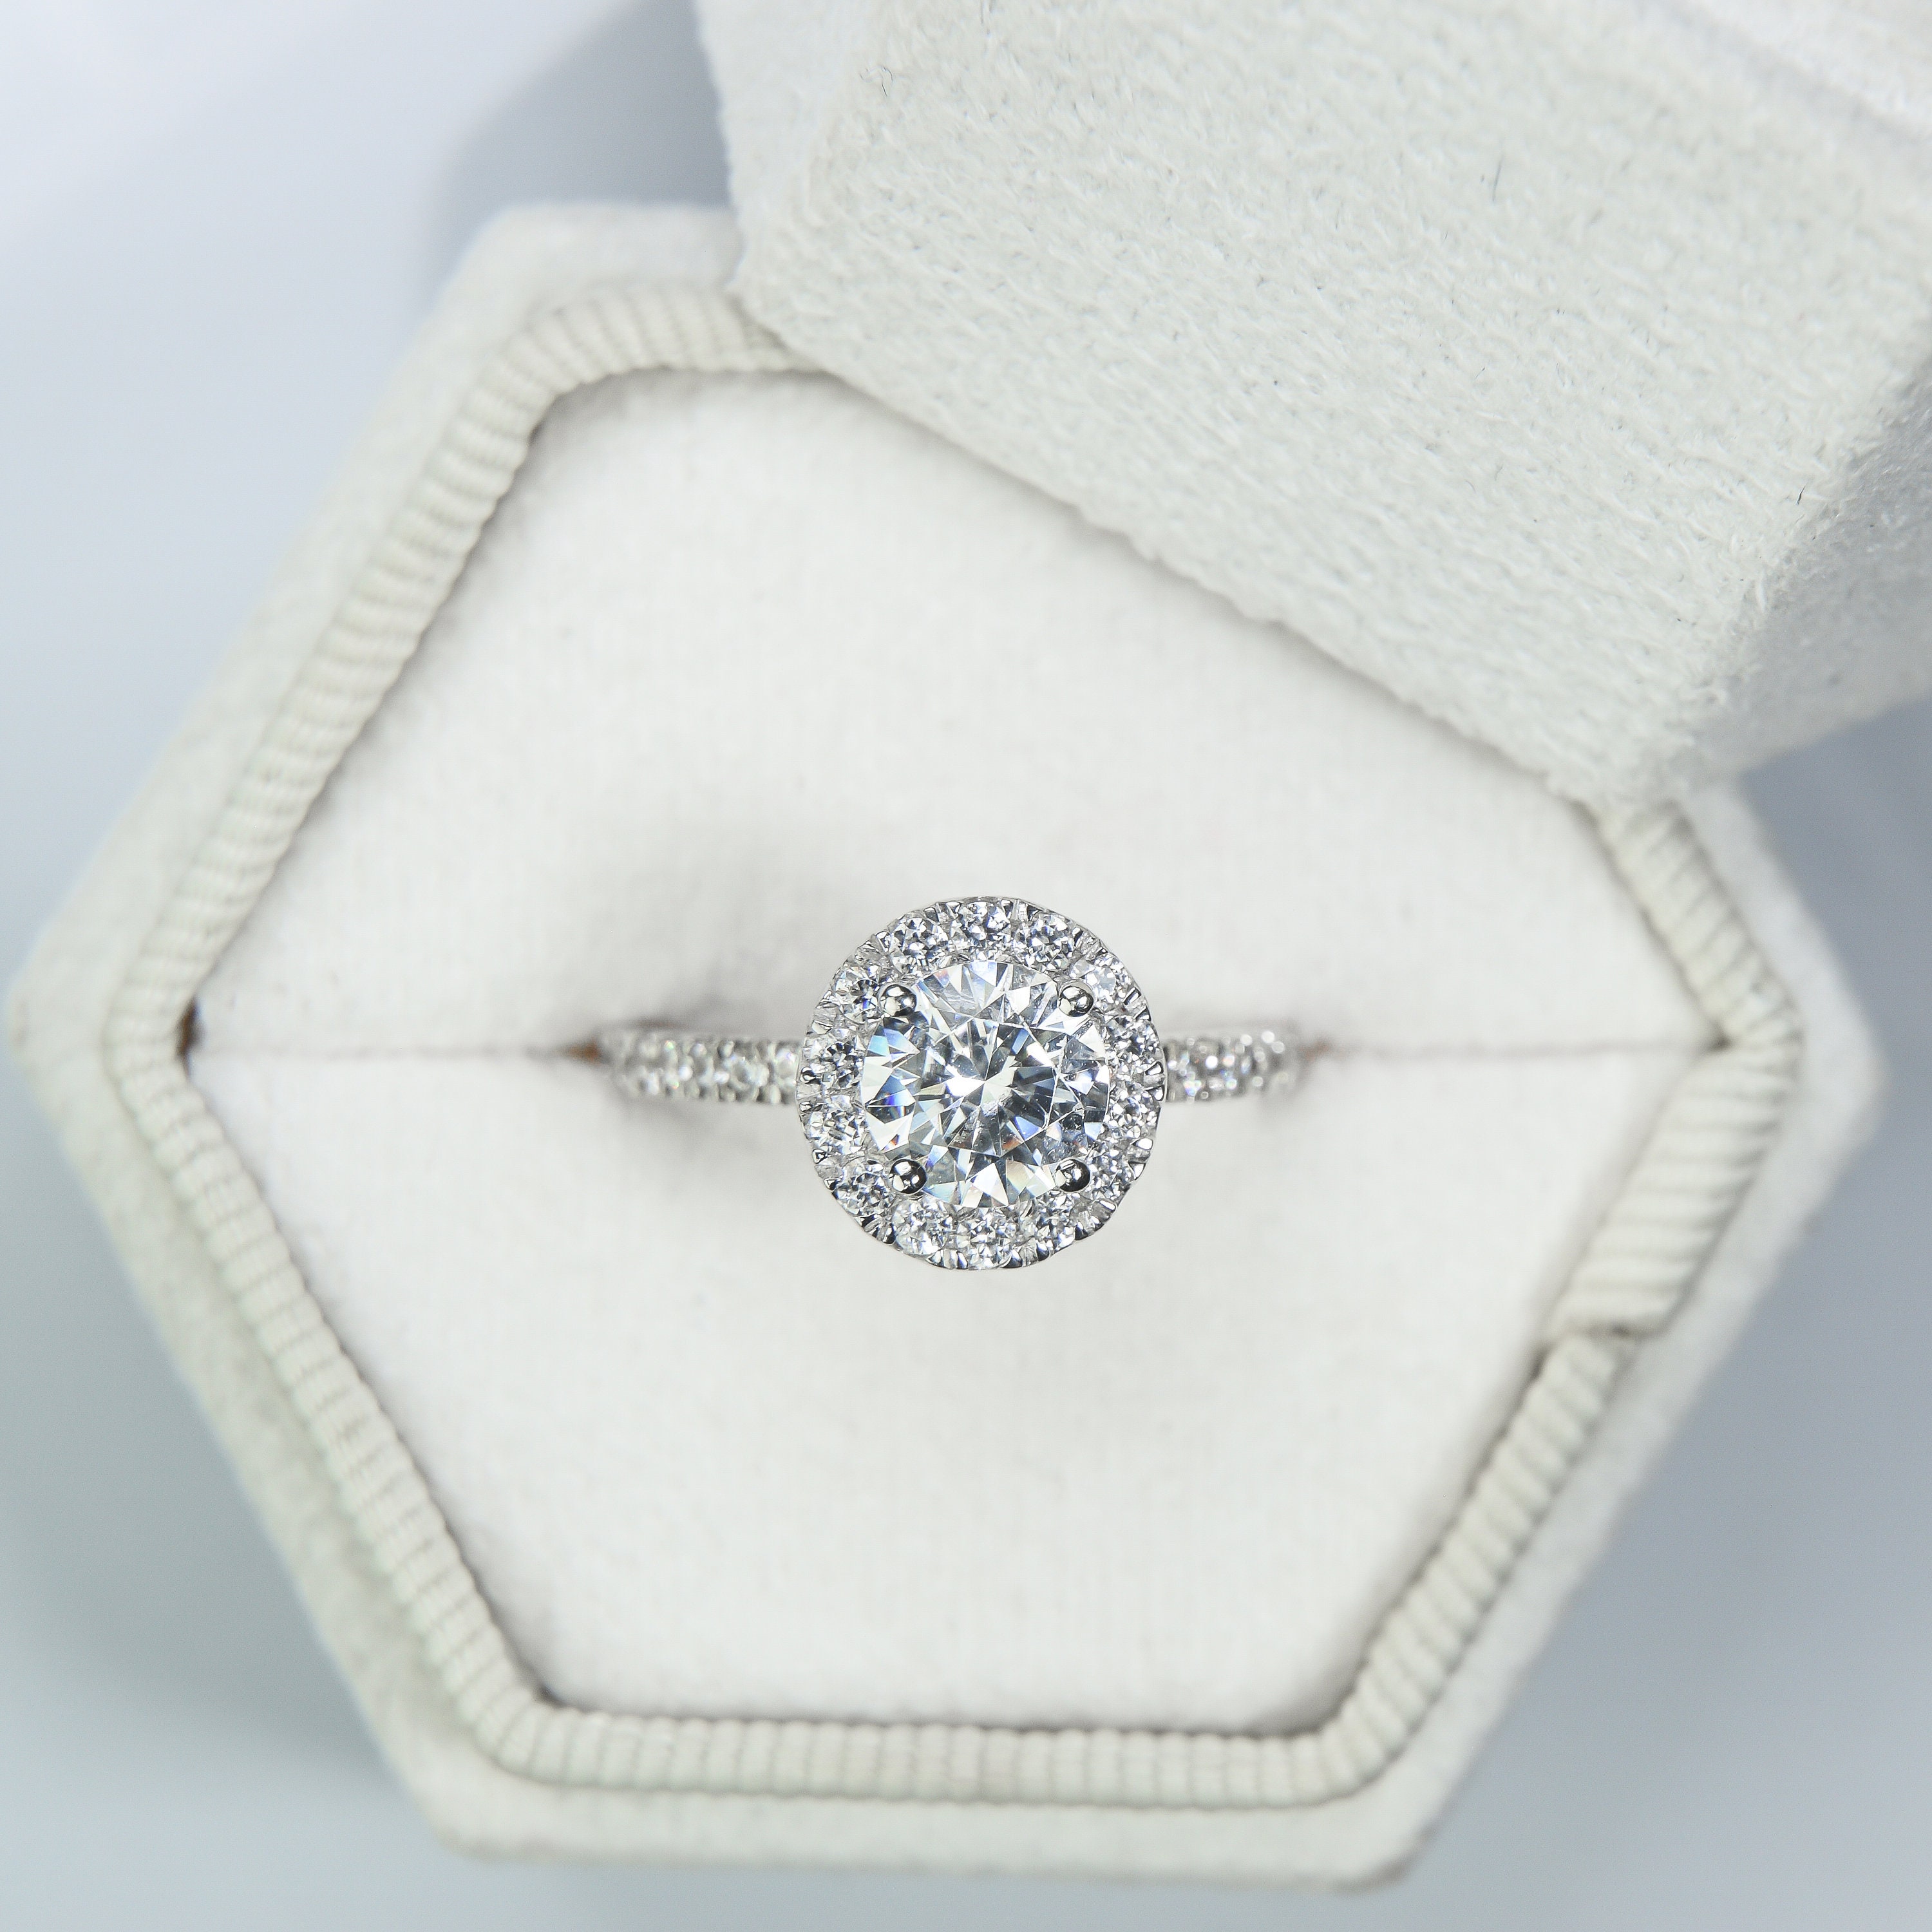 3 Ct Halo Split Shank Round Cut Diamond Engagement Ring SI1 F Treated | eBay